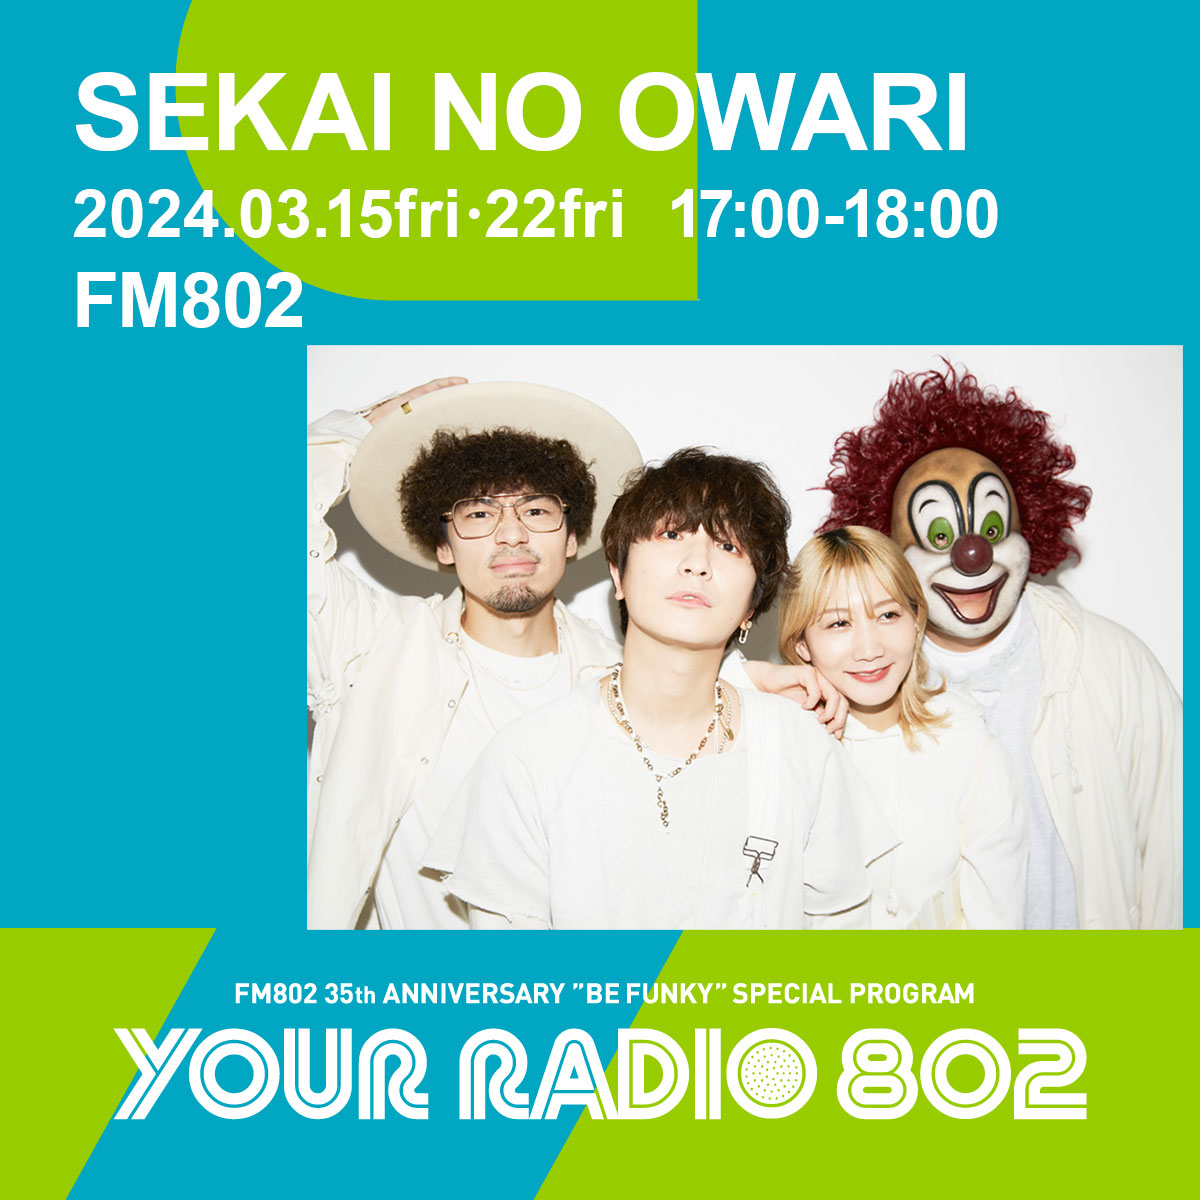 SEKAI NO OWARI、FM802の35周年記念番組